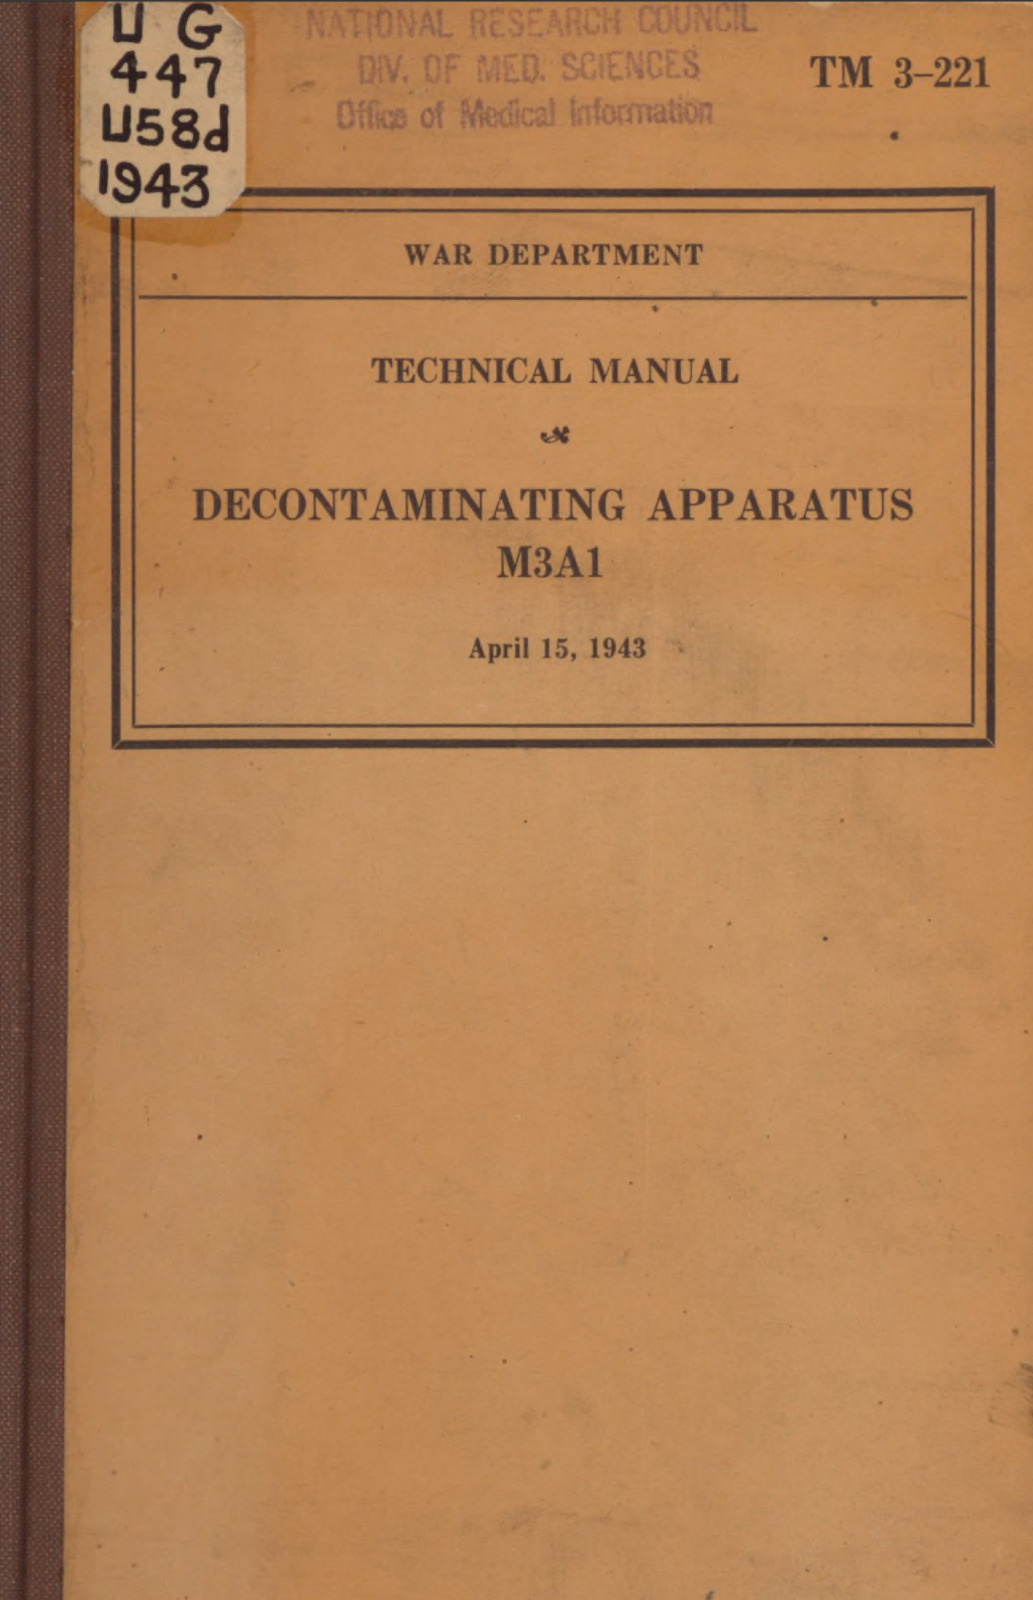 218 Page 1943 TM 3-221 Decontaminating Apparatus M3A1 400 Gal. Manual on Data CD